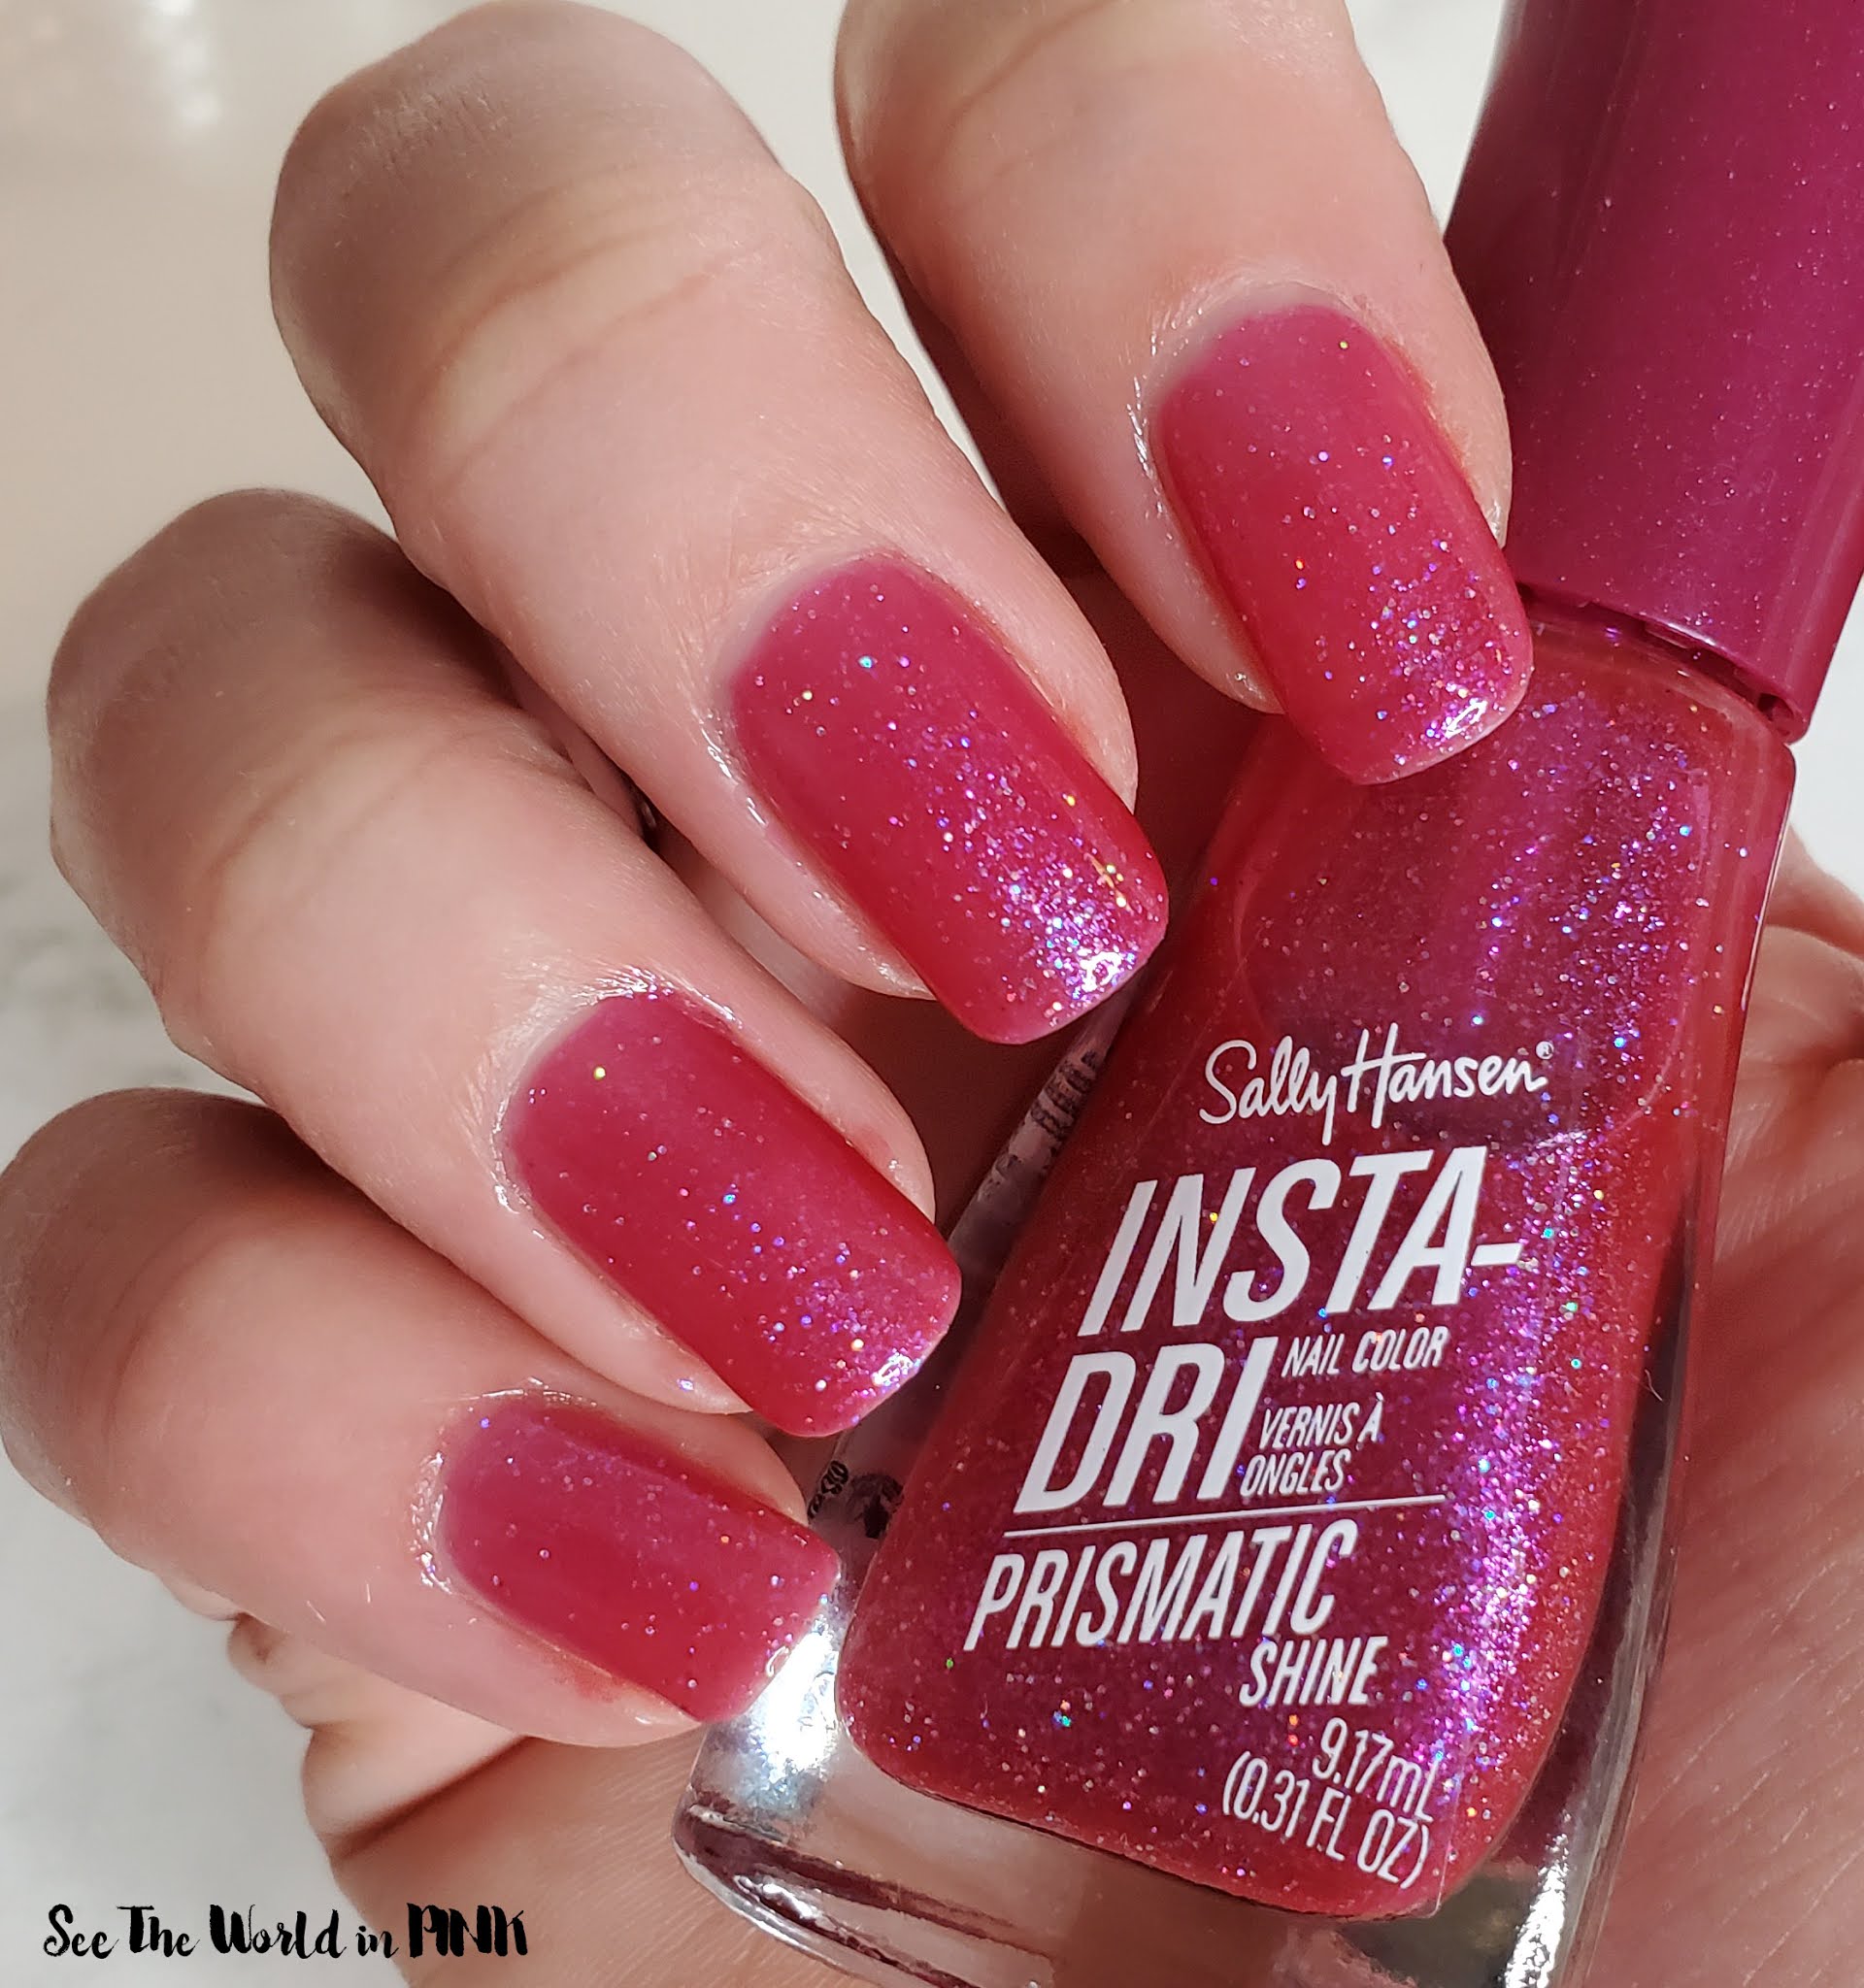 Manicure Monday - Sally Hansen Insta-Dri Prismatic Shine polish in Pink Aurora